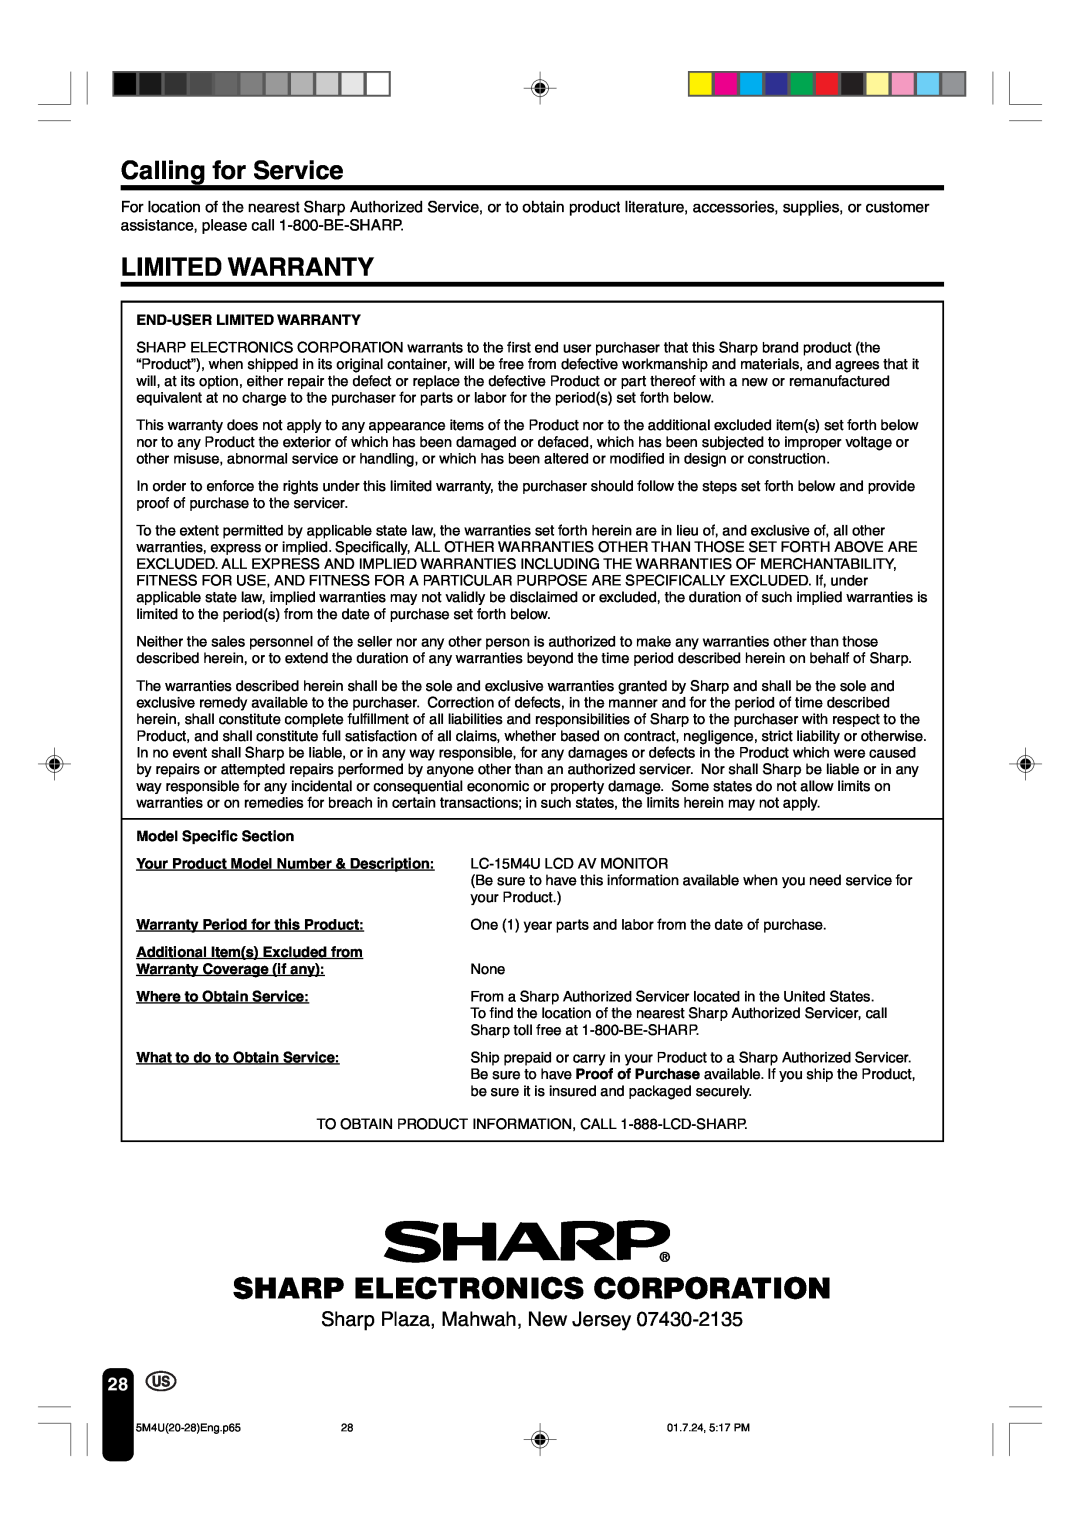 Sharp LC-15M4U Calling for Service, Limited Warranty, Sharp Electronics Corporation, Sharp Plaza, Mahwah, New Jersey 